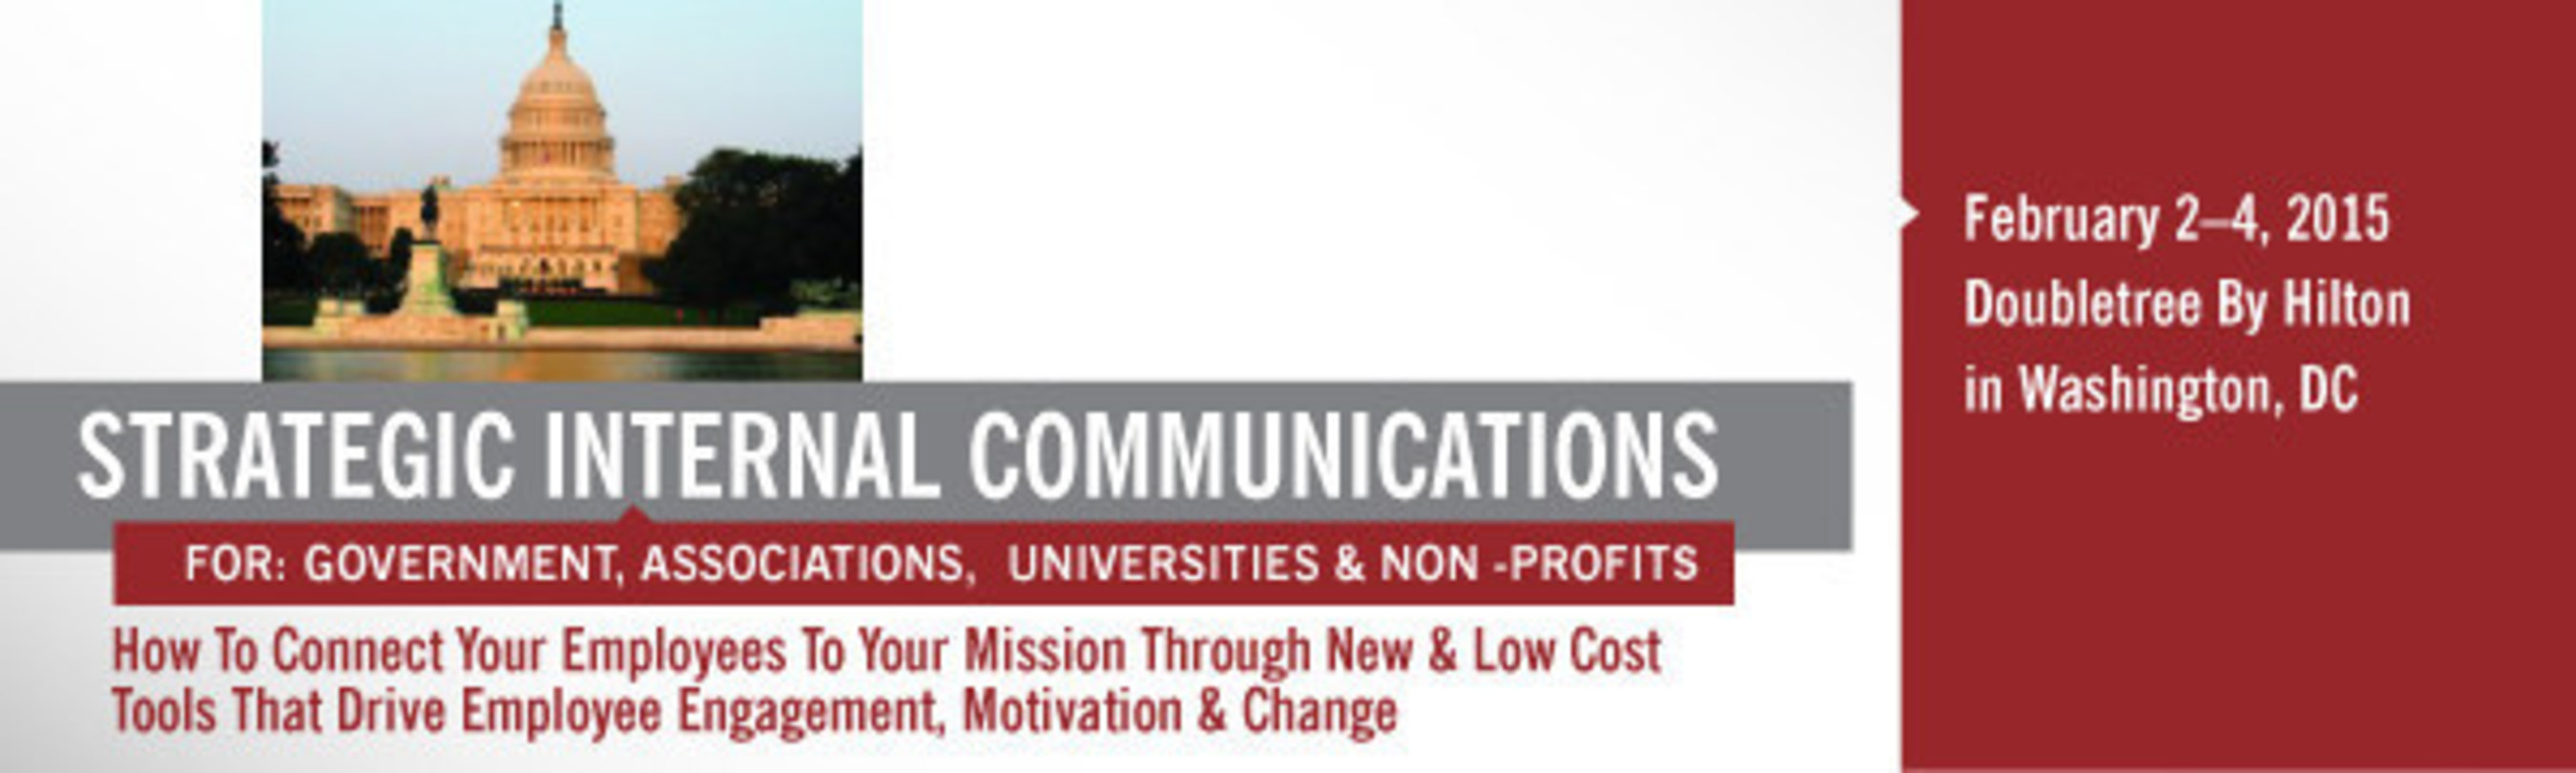 Strategic Internal Communications: For Government, Associations, Universities & Non-Profits